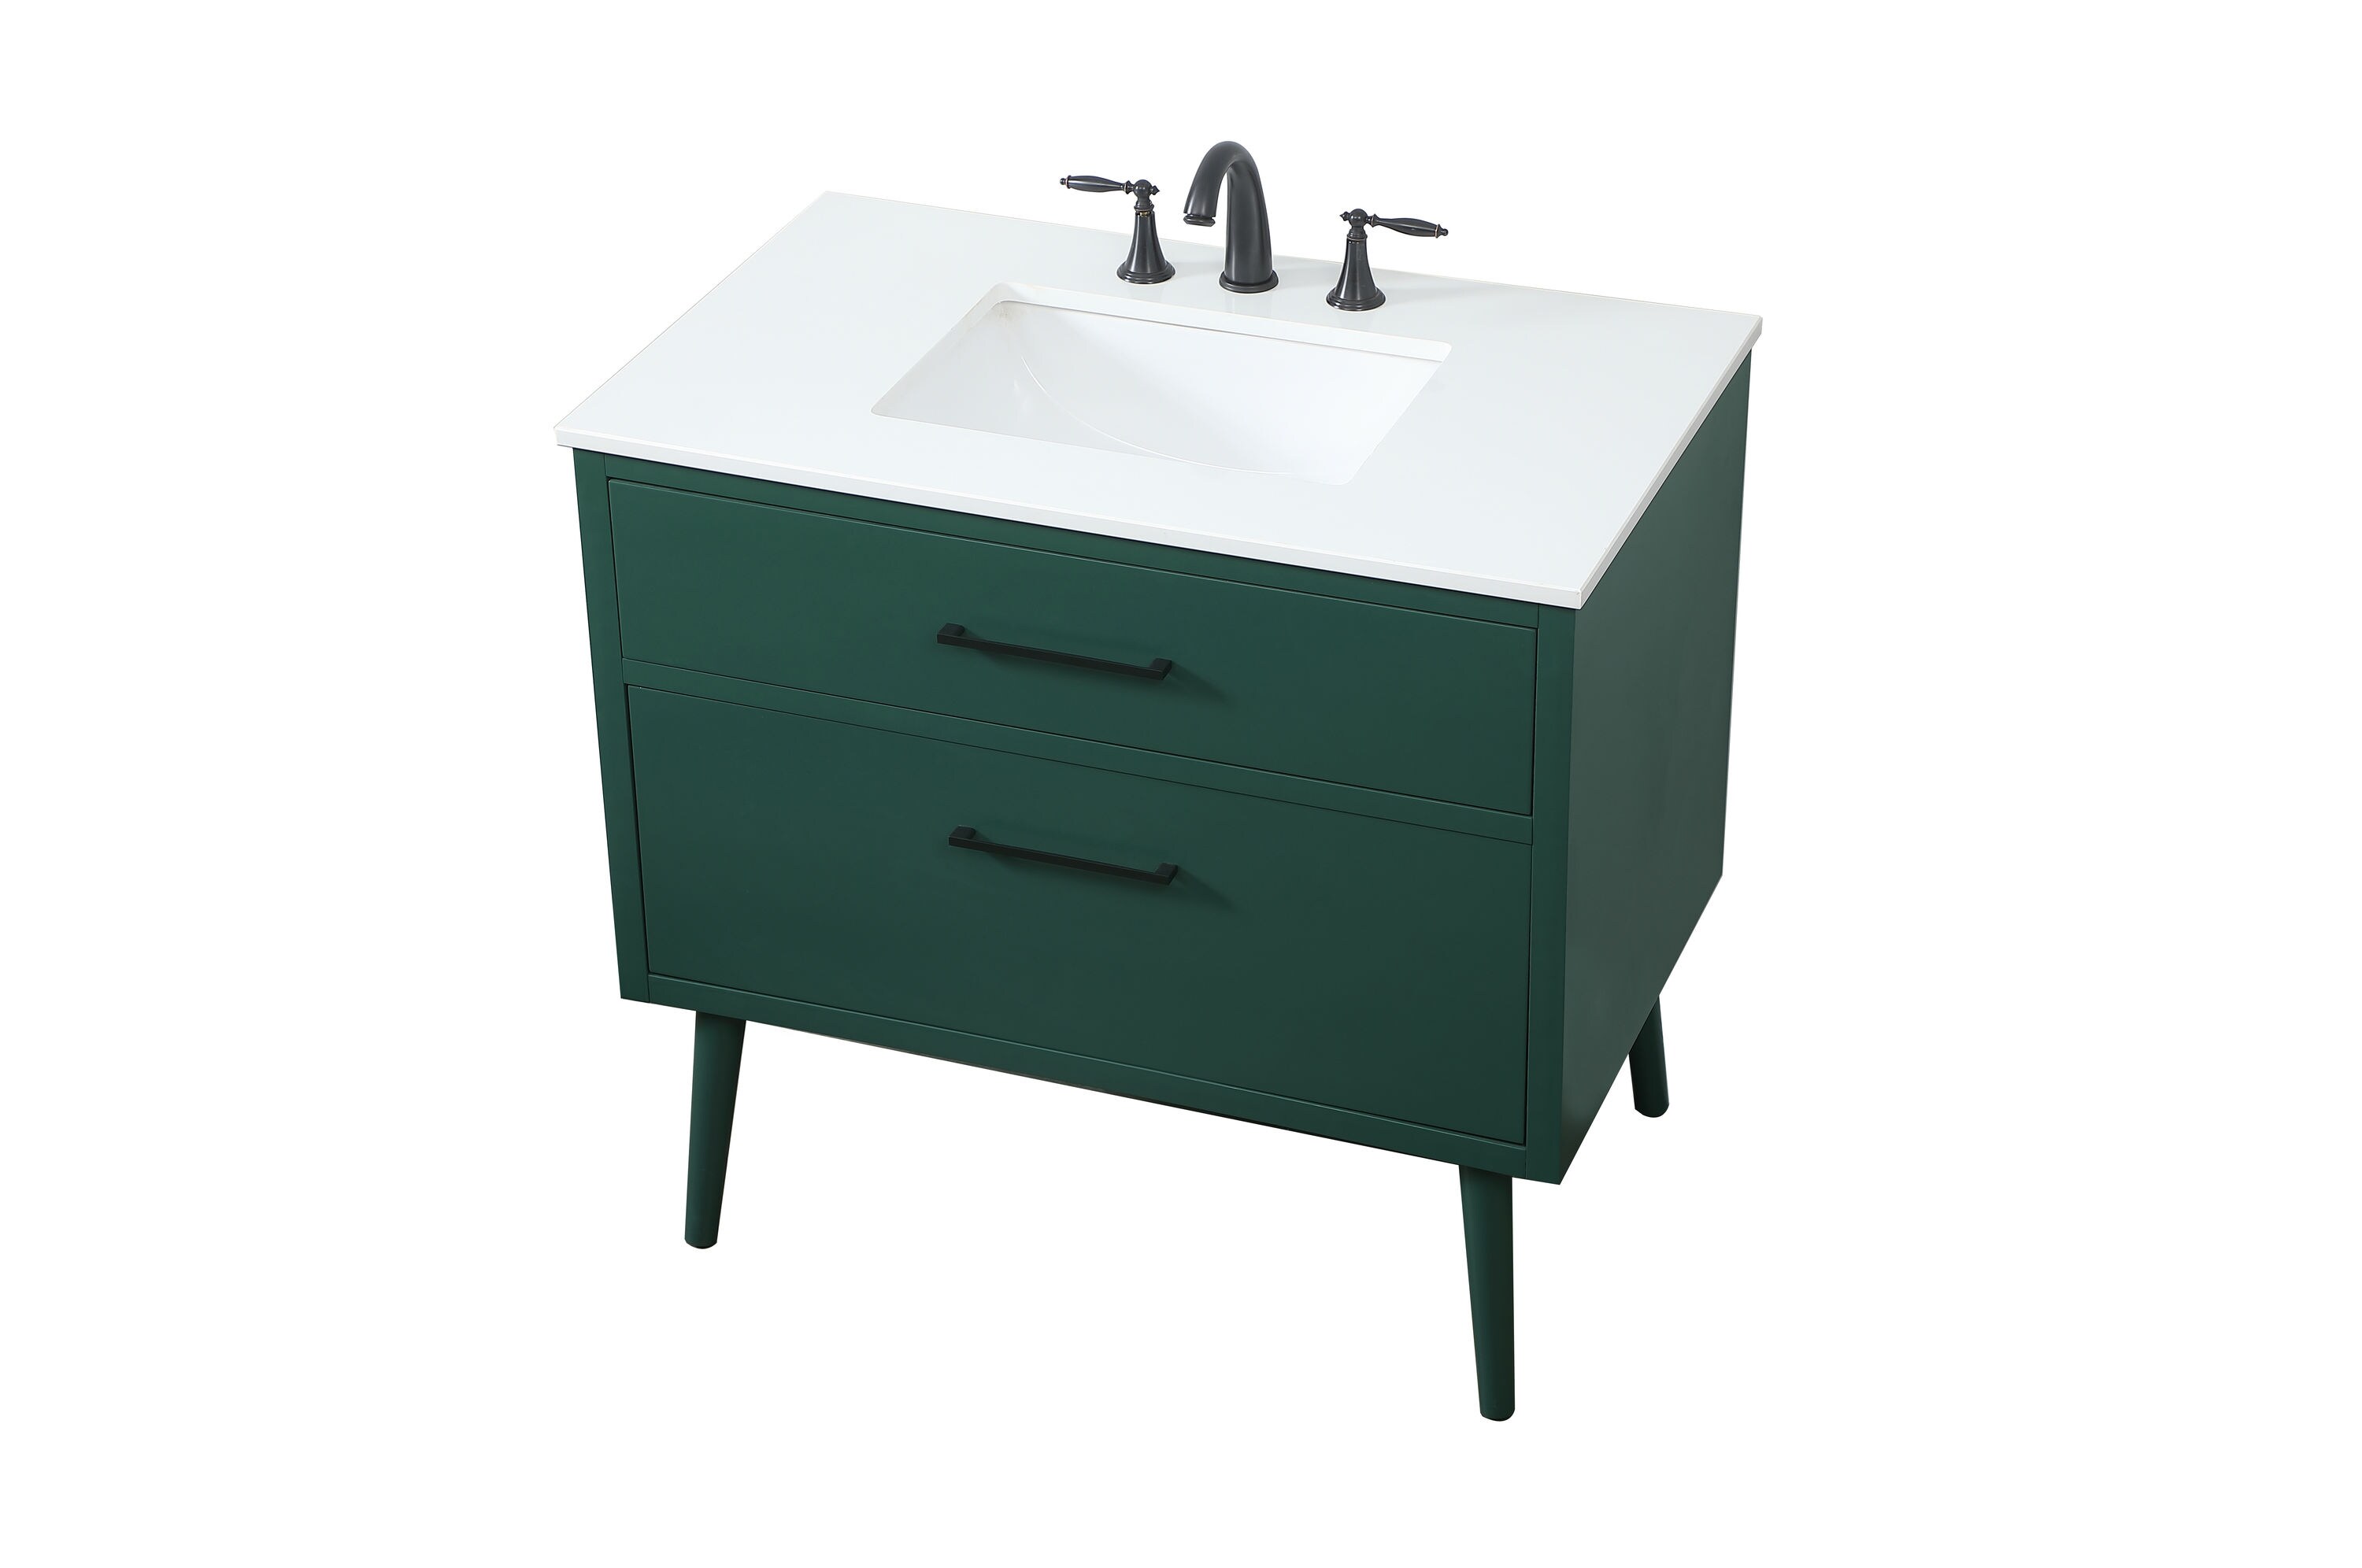 Elegant Decor Home Furnishing 36-in Green Undermount Single Sink ...